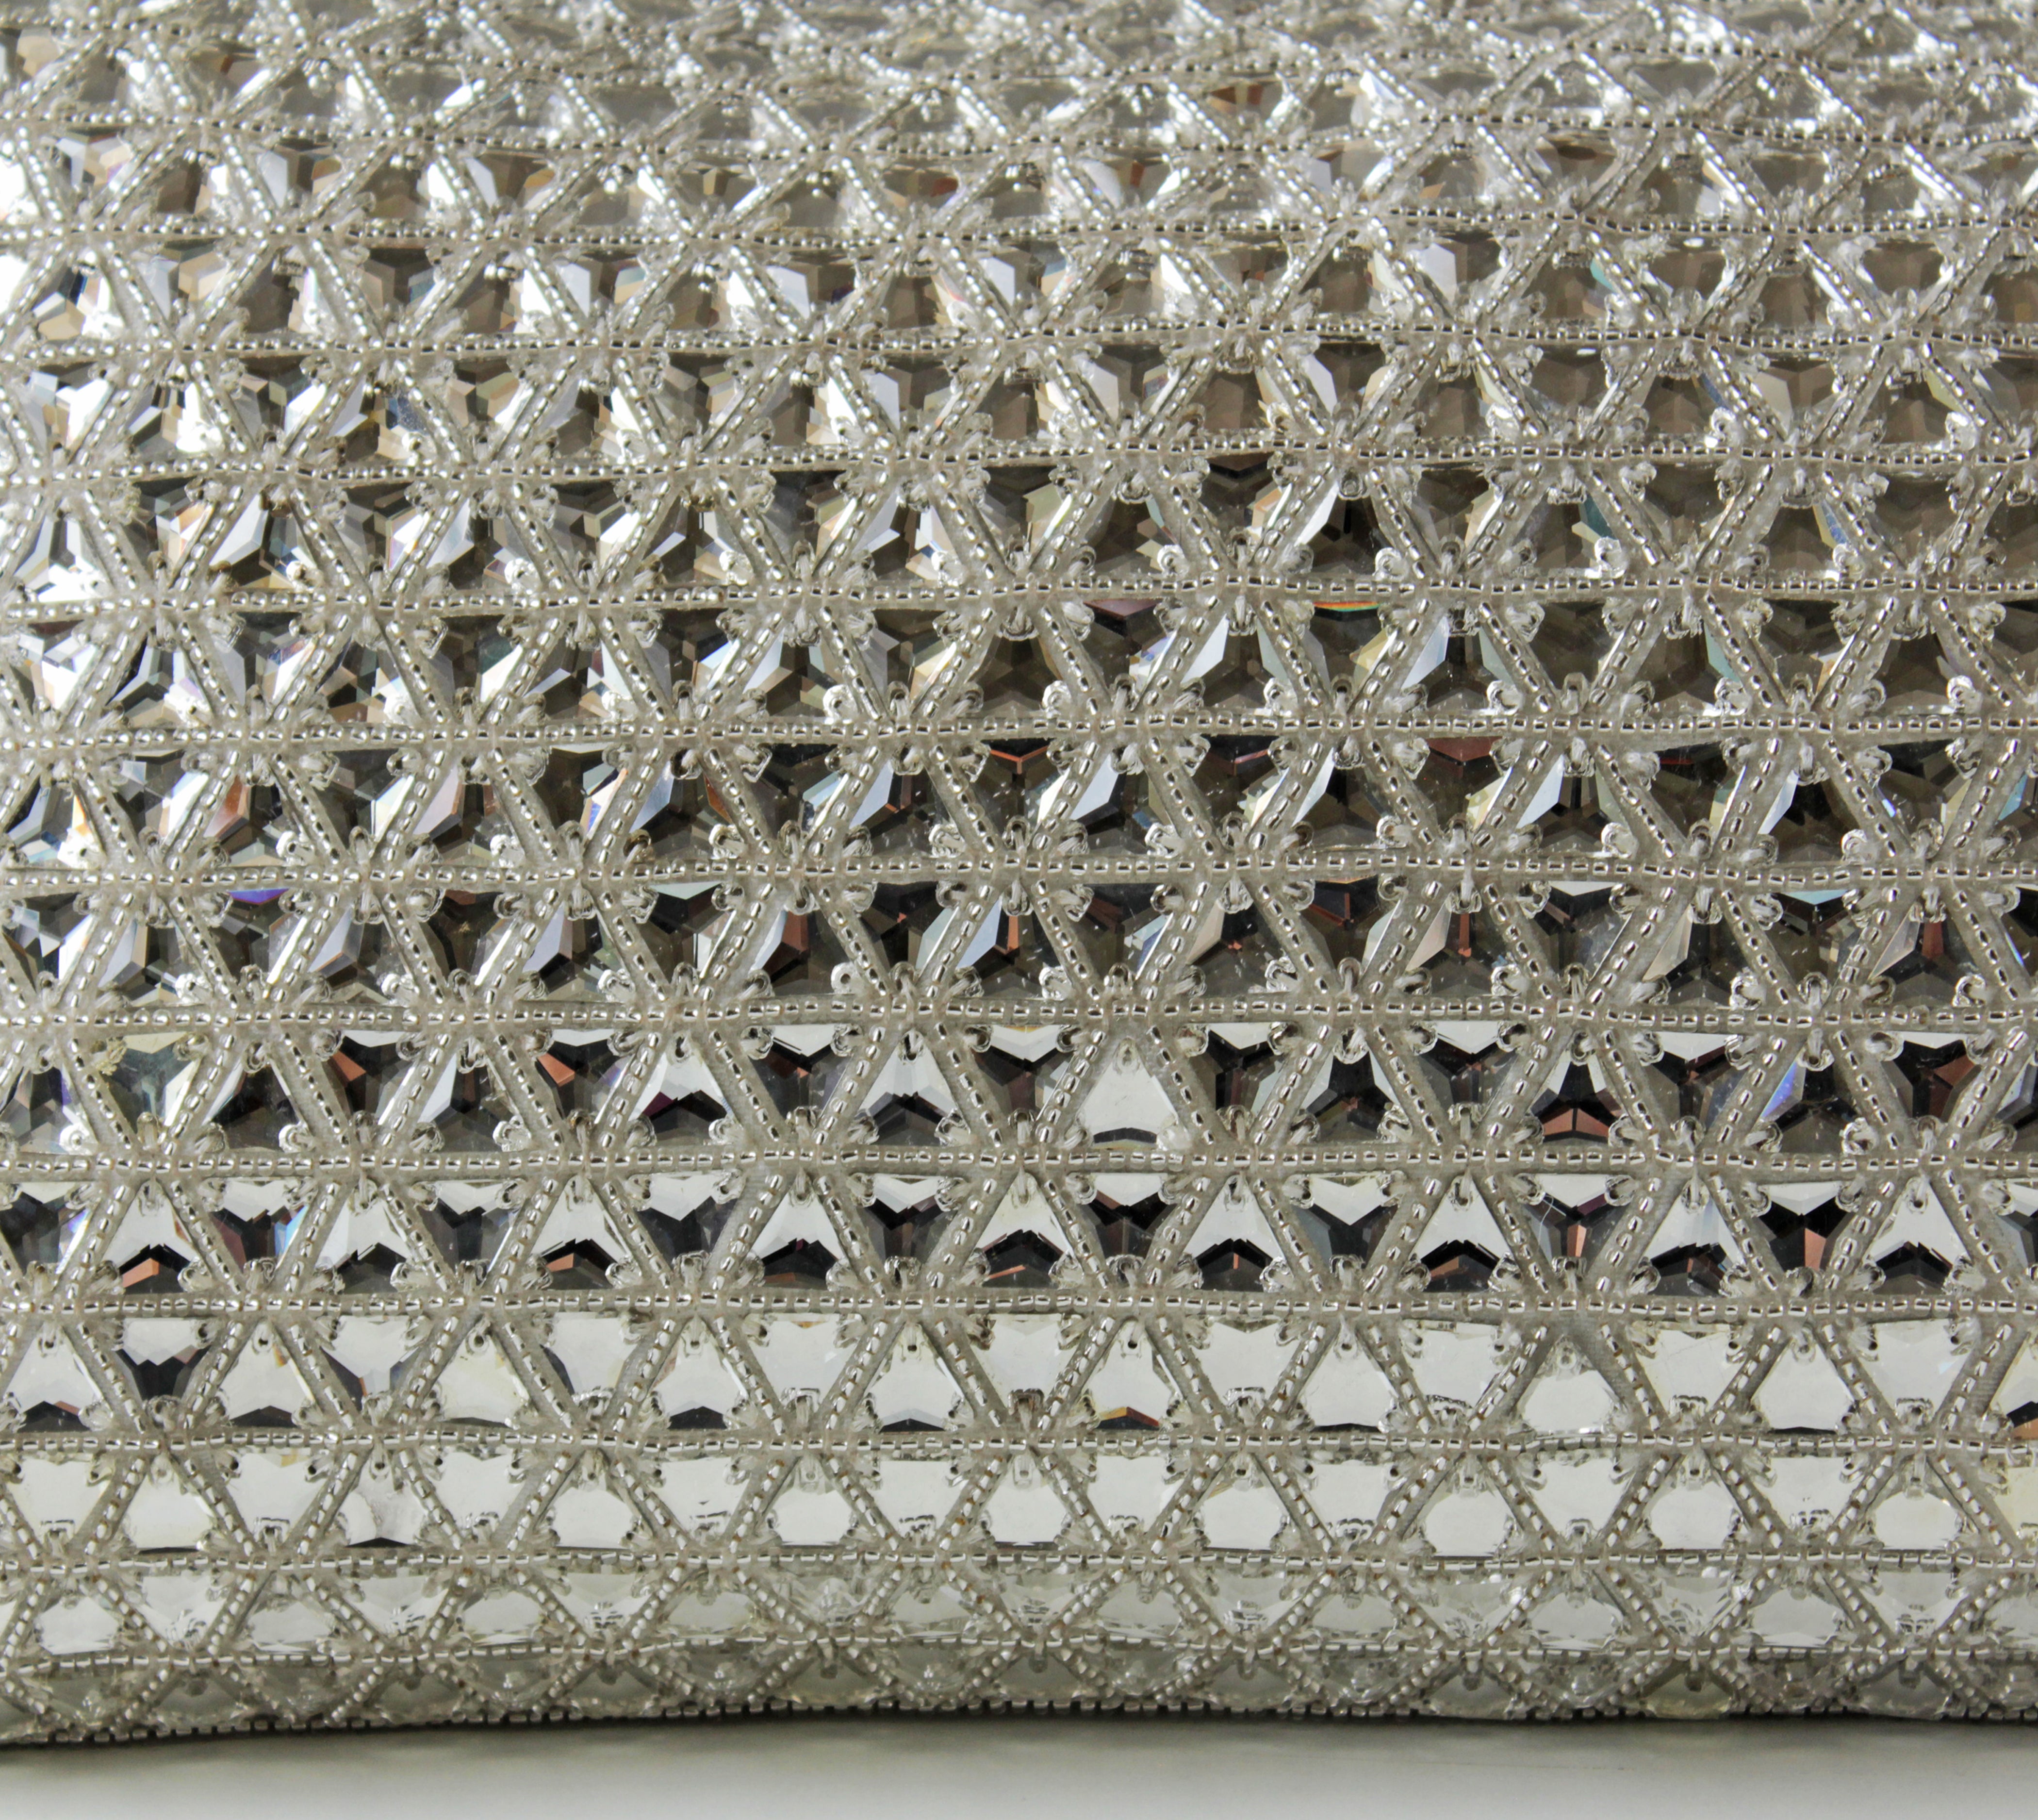 SOFIA White and Silver Rhinestone Cushion Cover